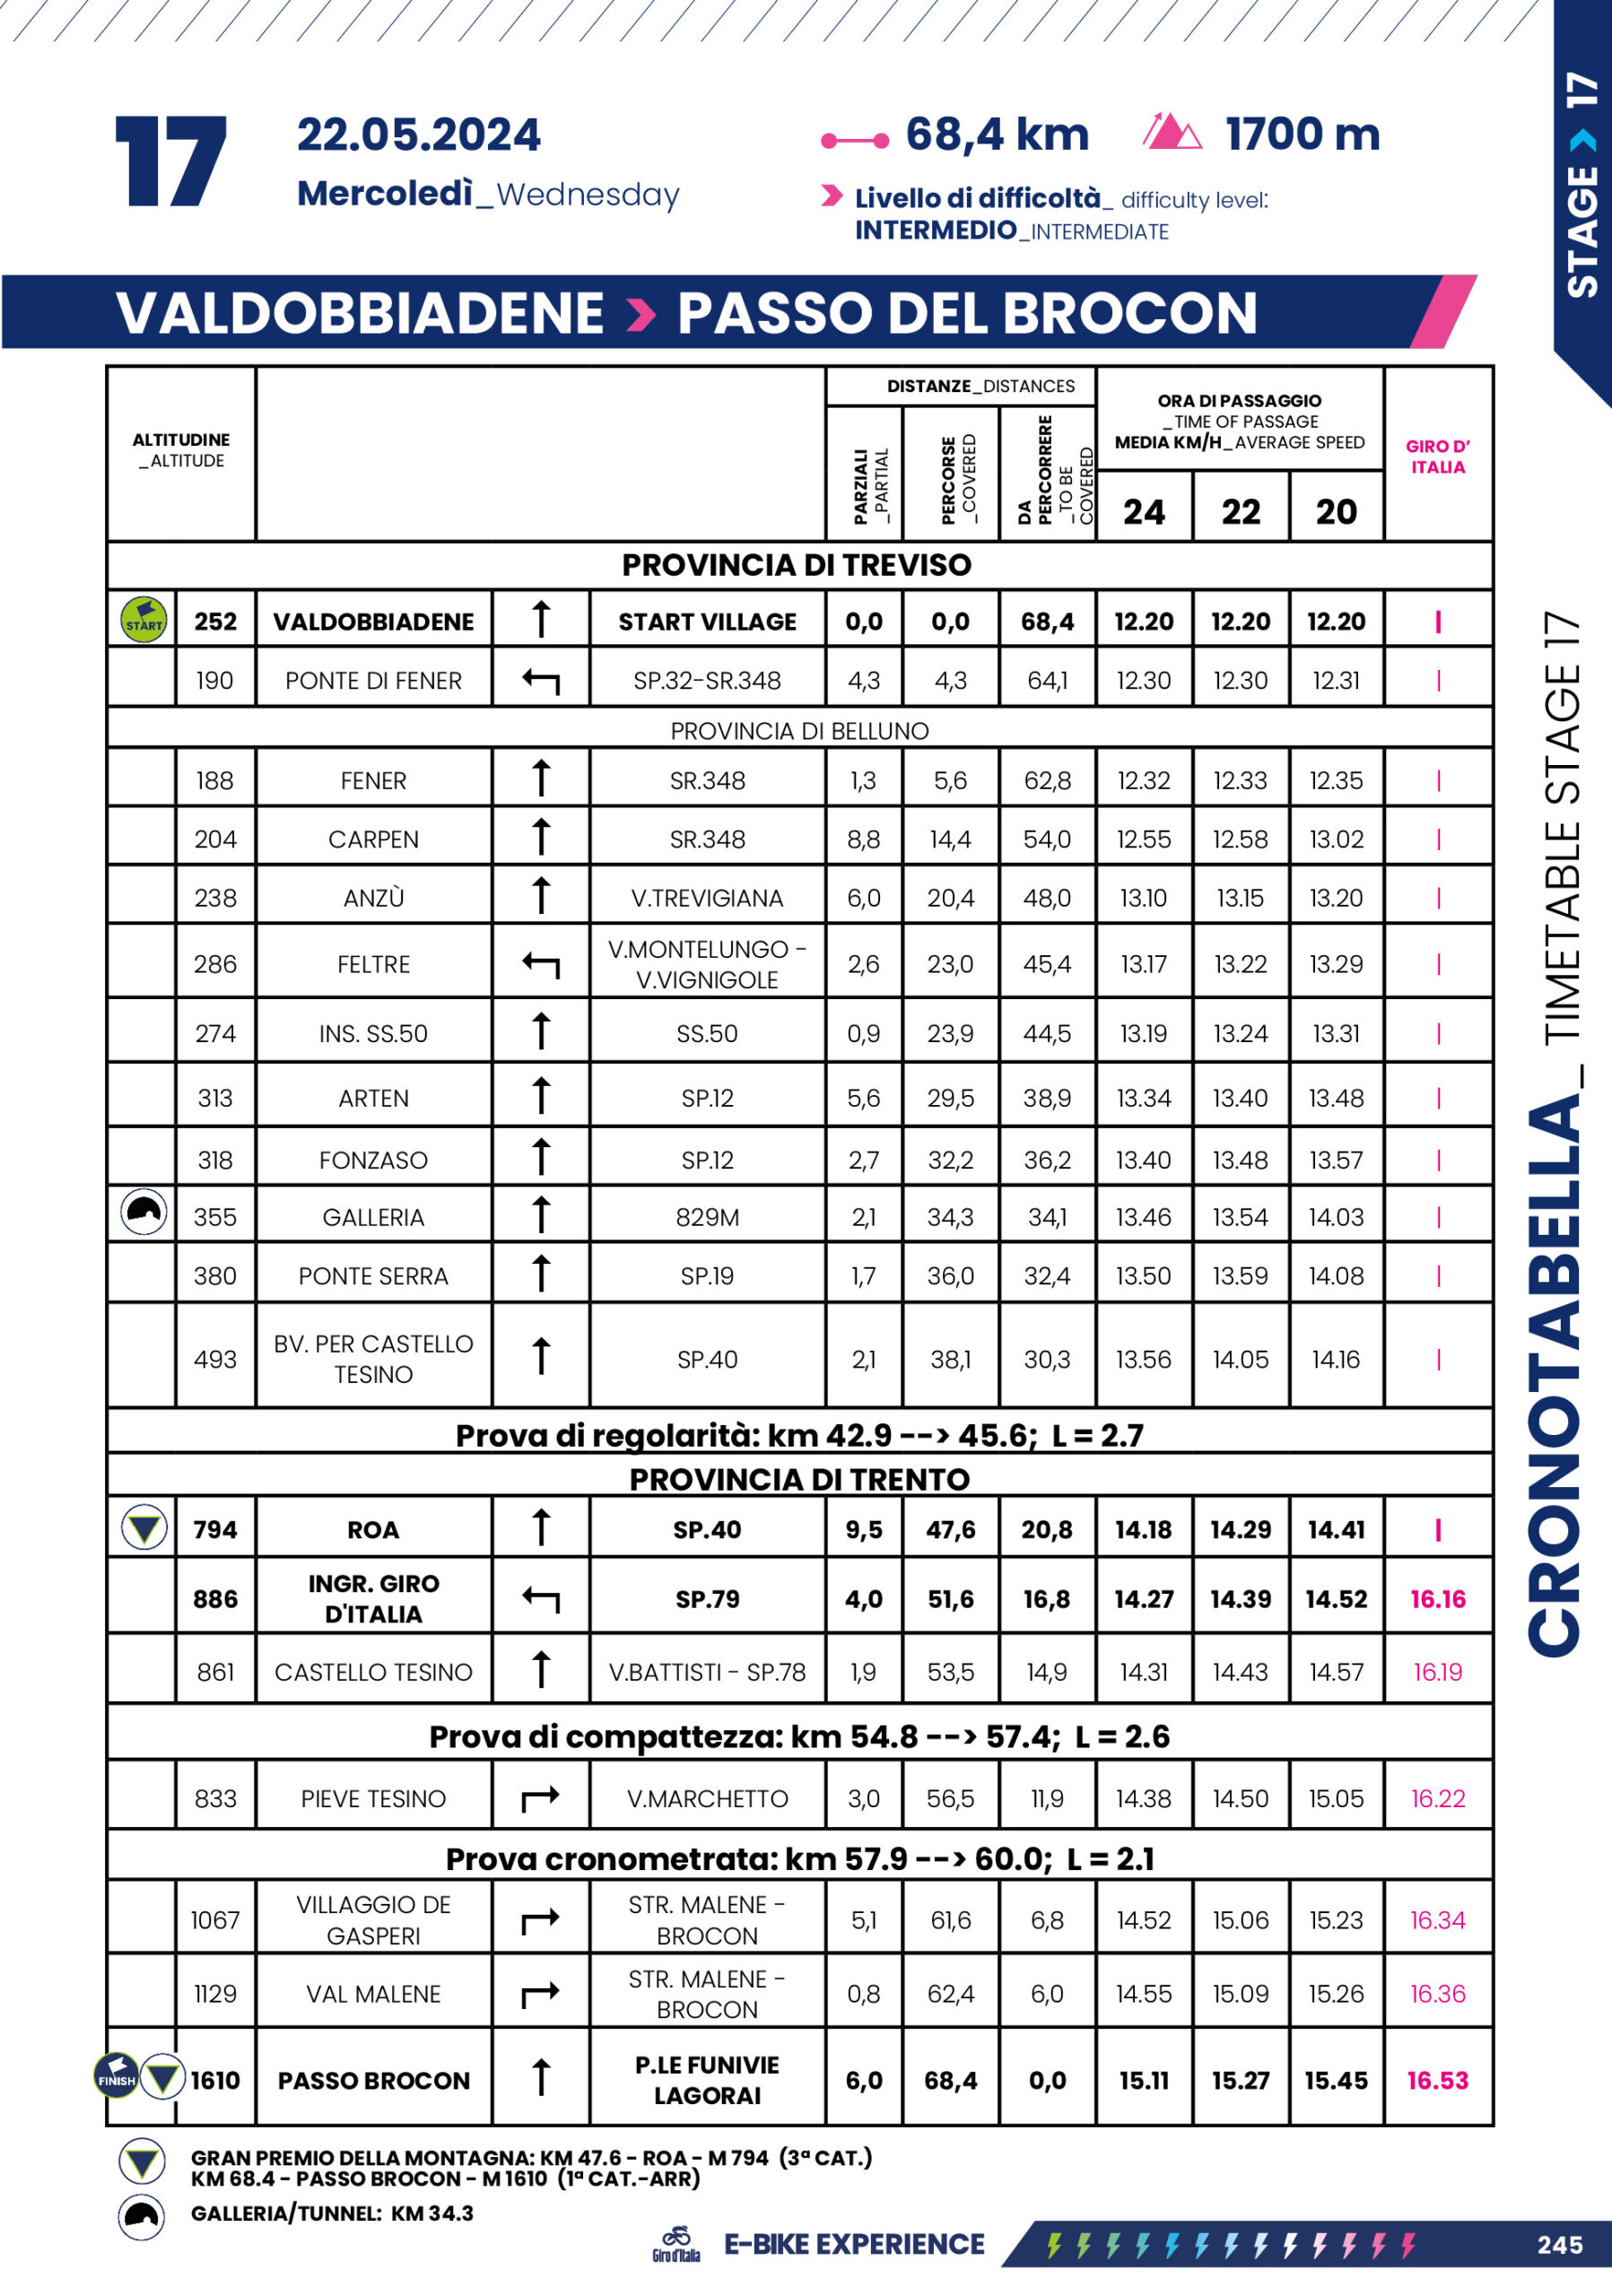 Cronotabella/Itinerary Timetable Tappa 17 Giro-E 2024